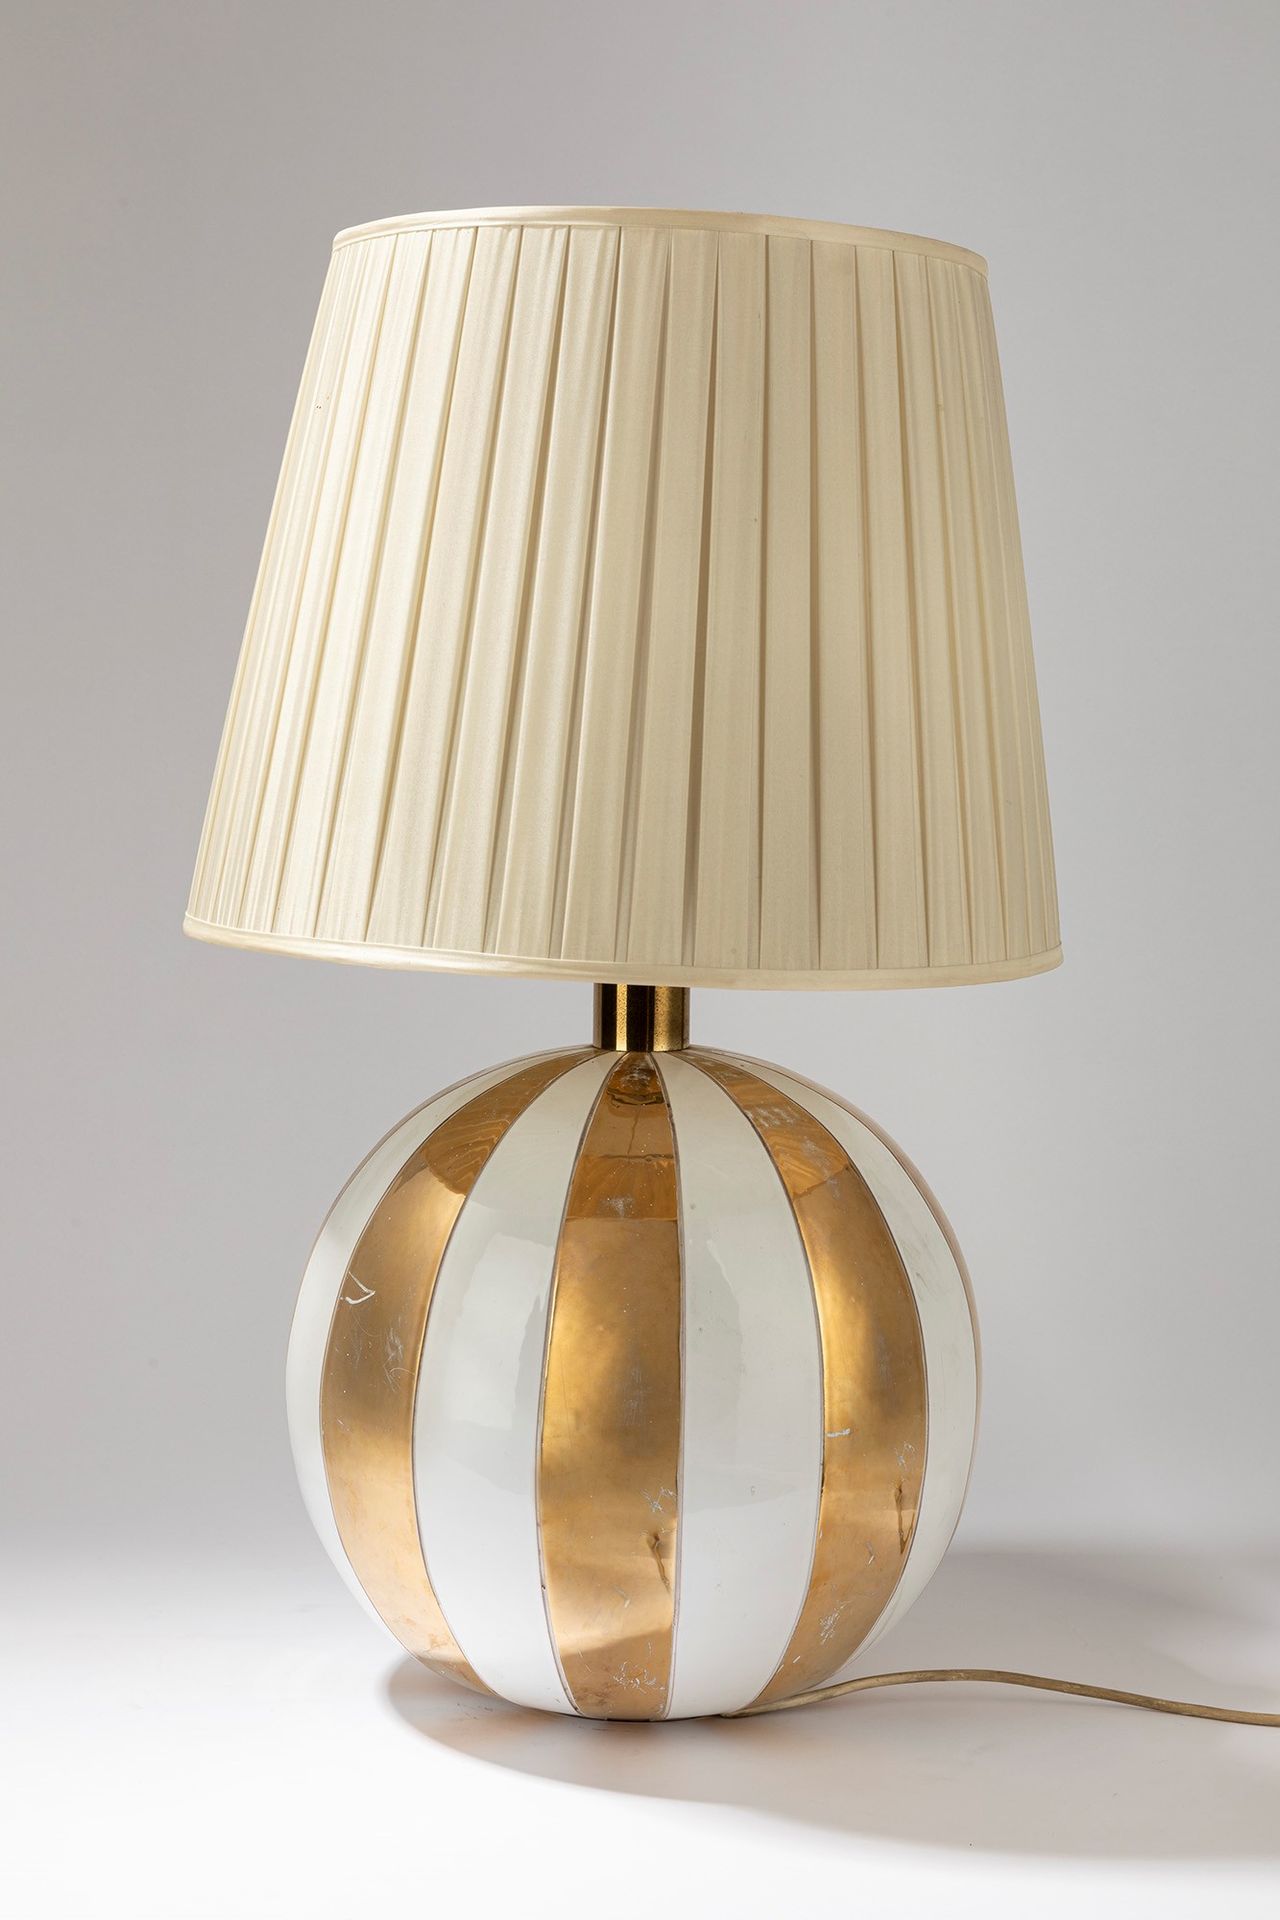 ITALIAN MANUFACTURE 台灯，60年代

H cm 80
金色和白色釉面陶瓷。